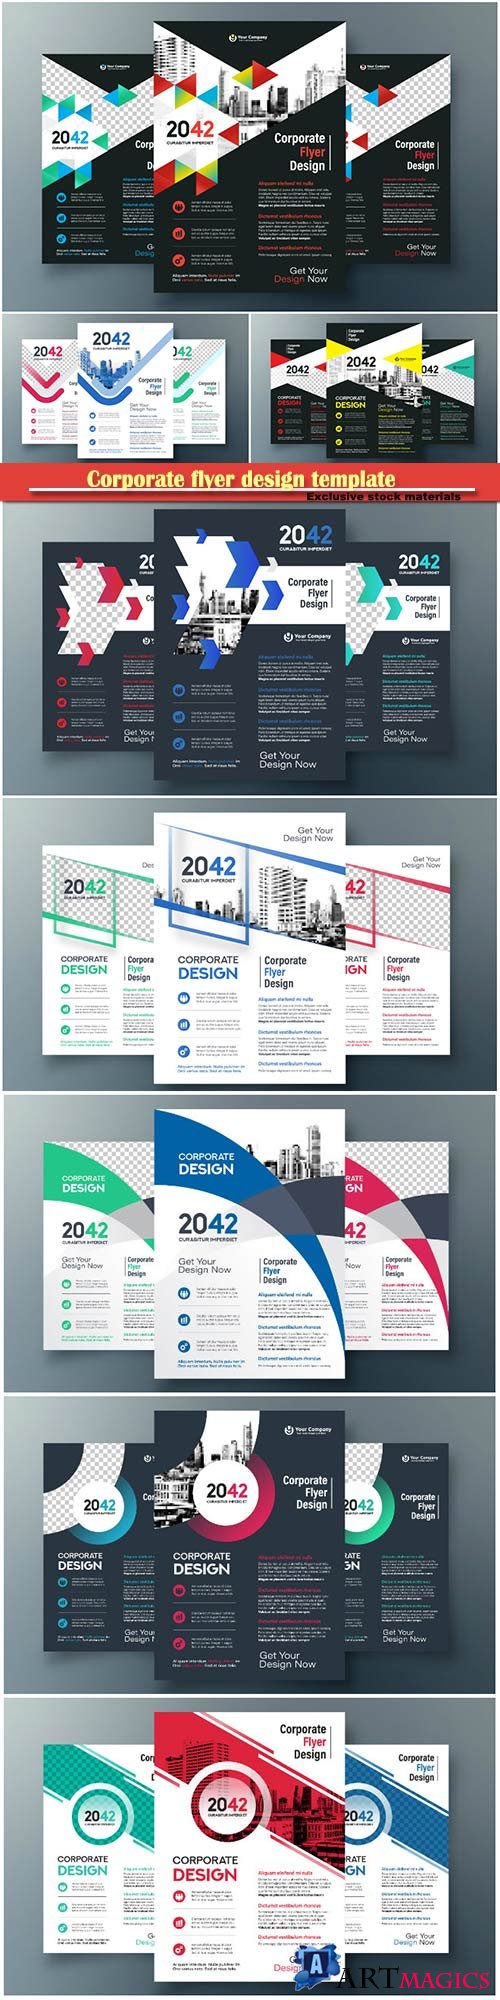 Corporate flyer design template, business vector design template